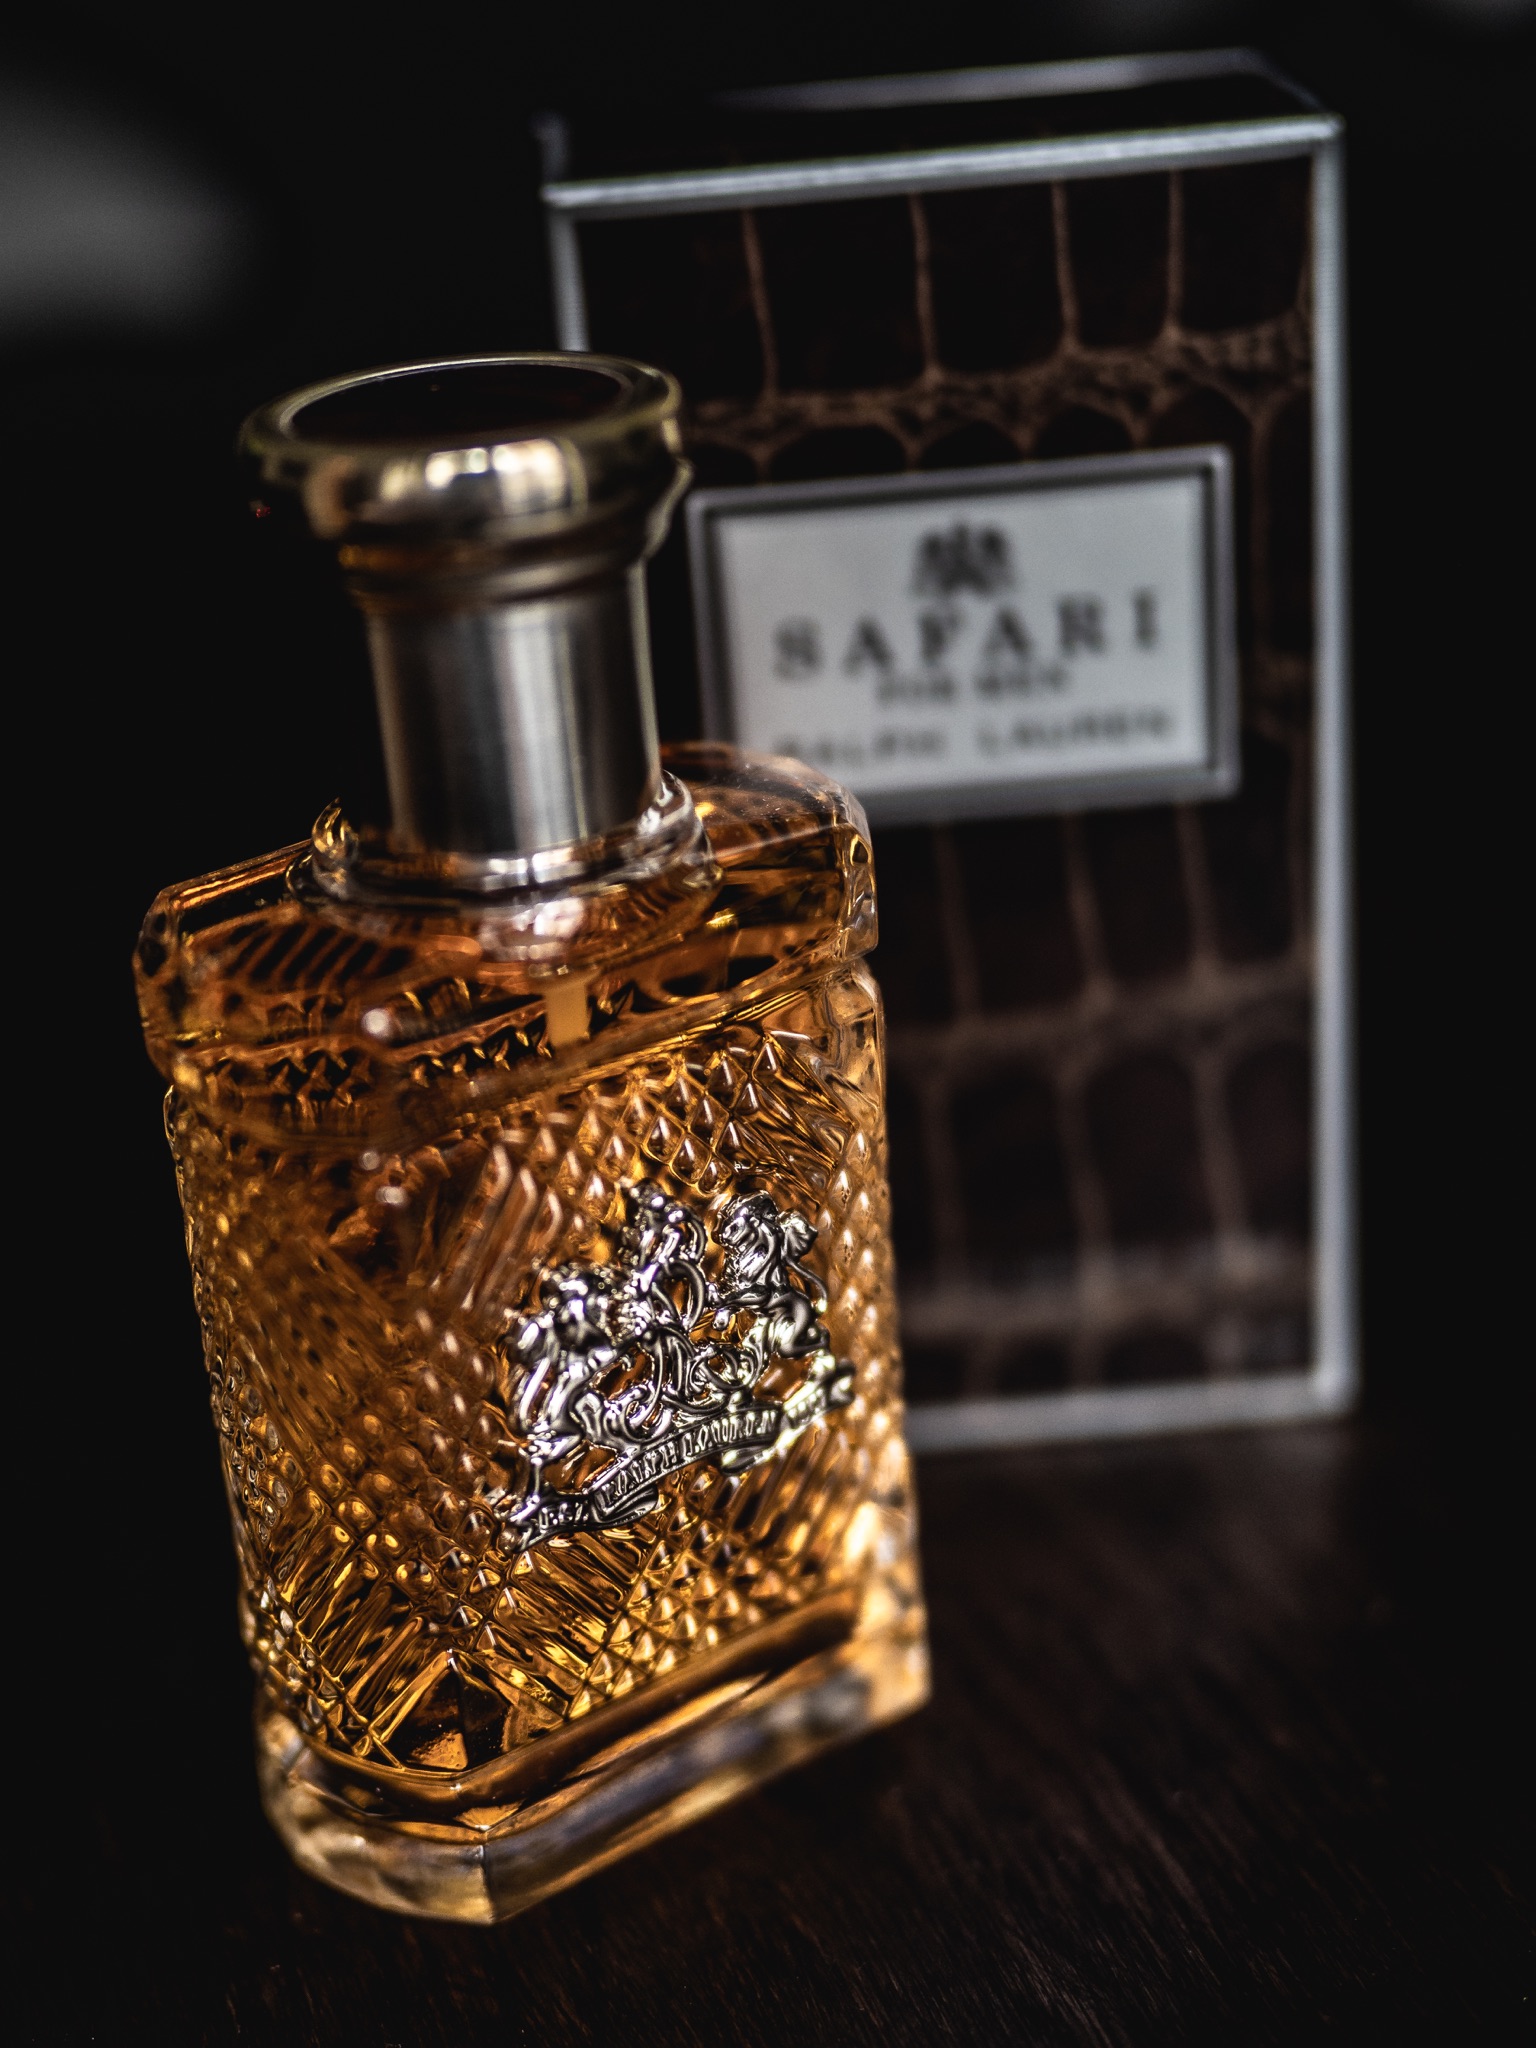 safari fragrance